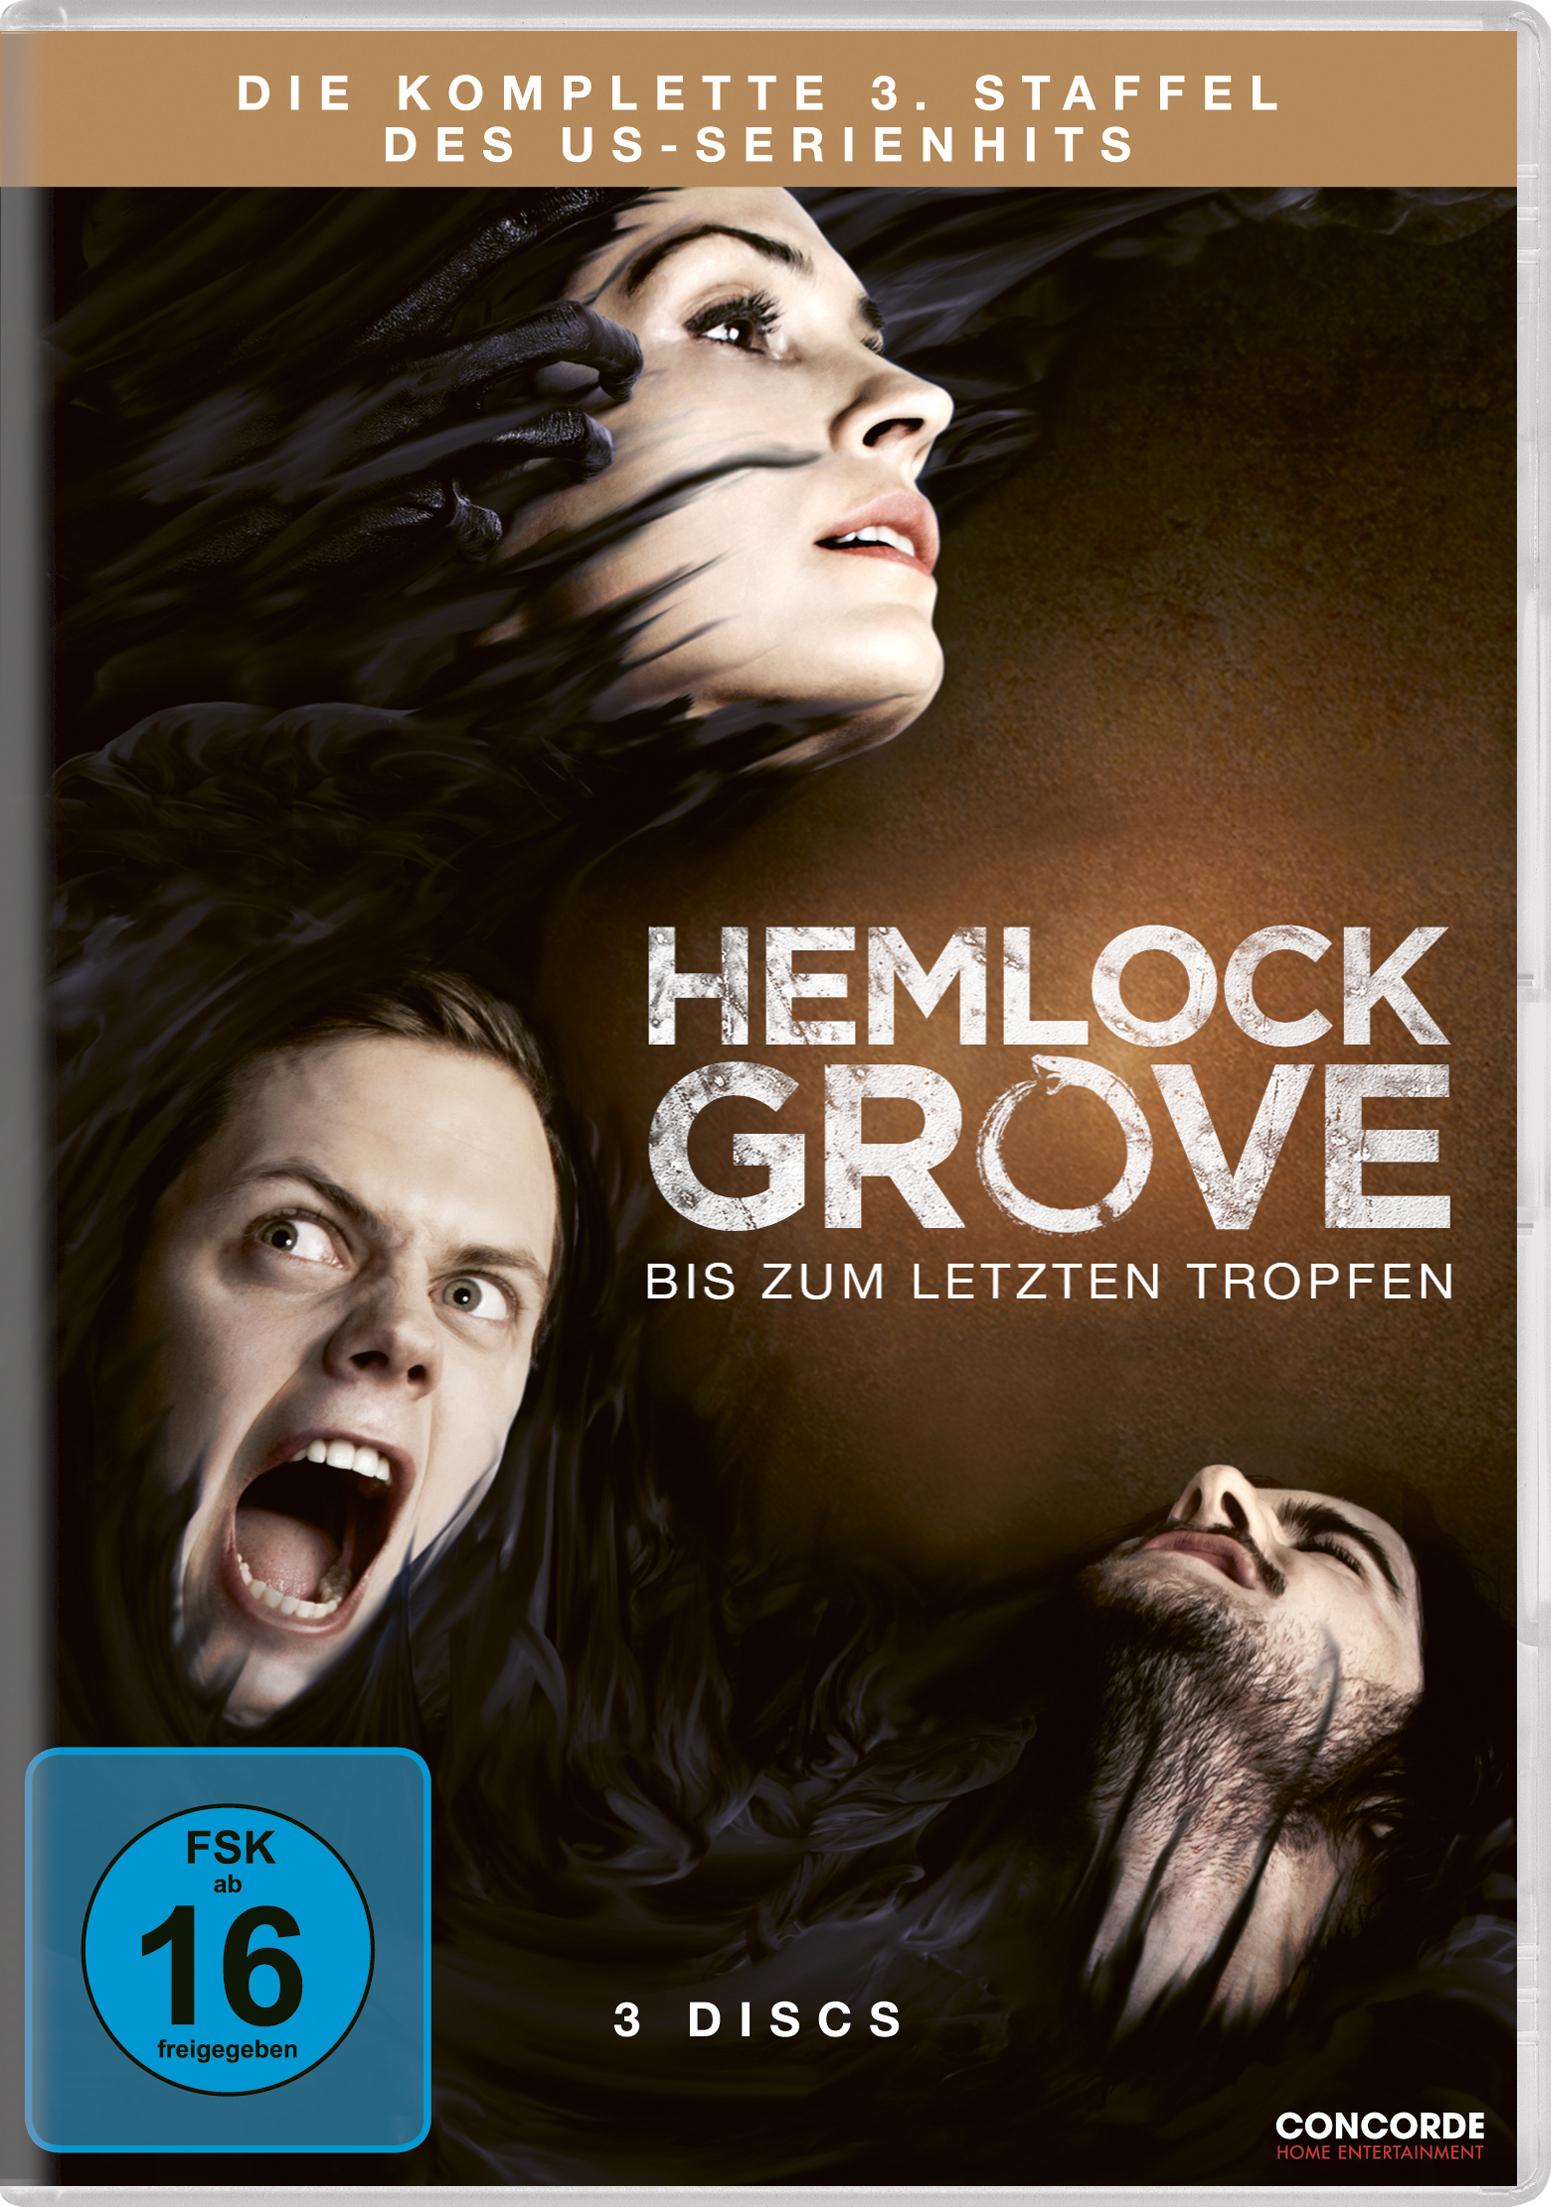 Bis - letzten Tropfen zum - Staffel Hemlock 3 Grove DVD